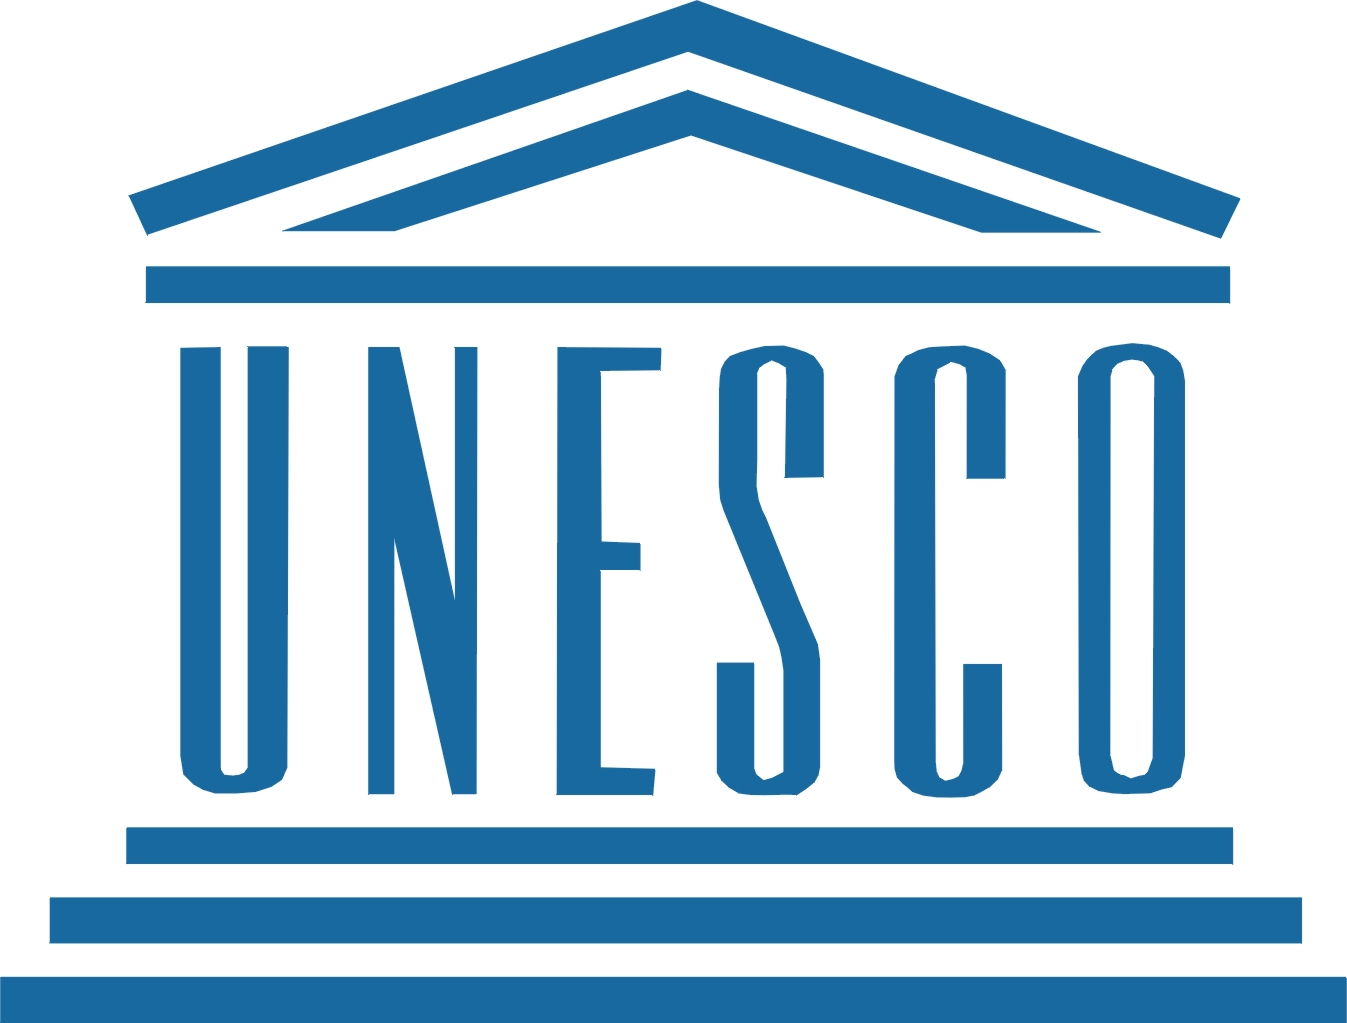 Nasce logo per siti candidati a Unesco